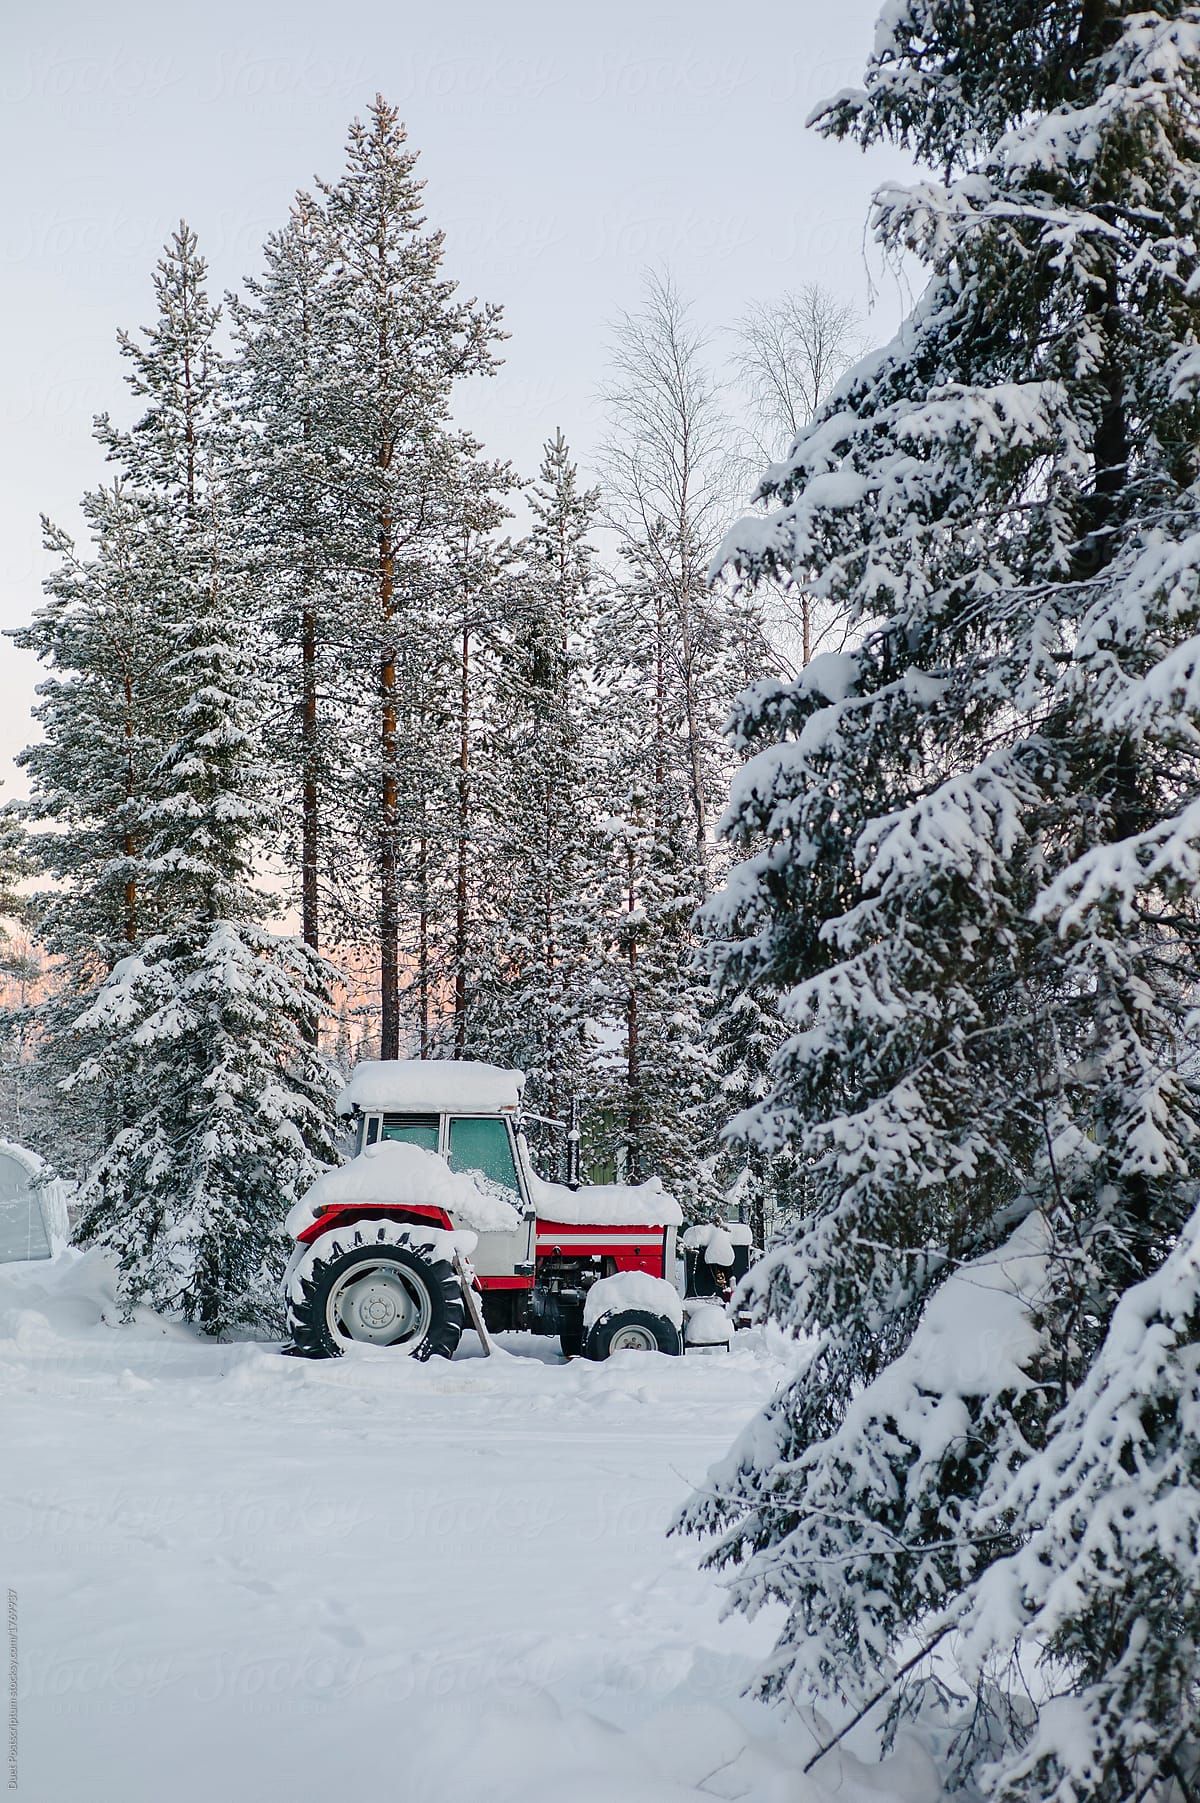 Tractor in snowy rural village